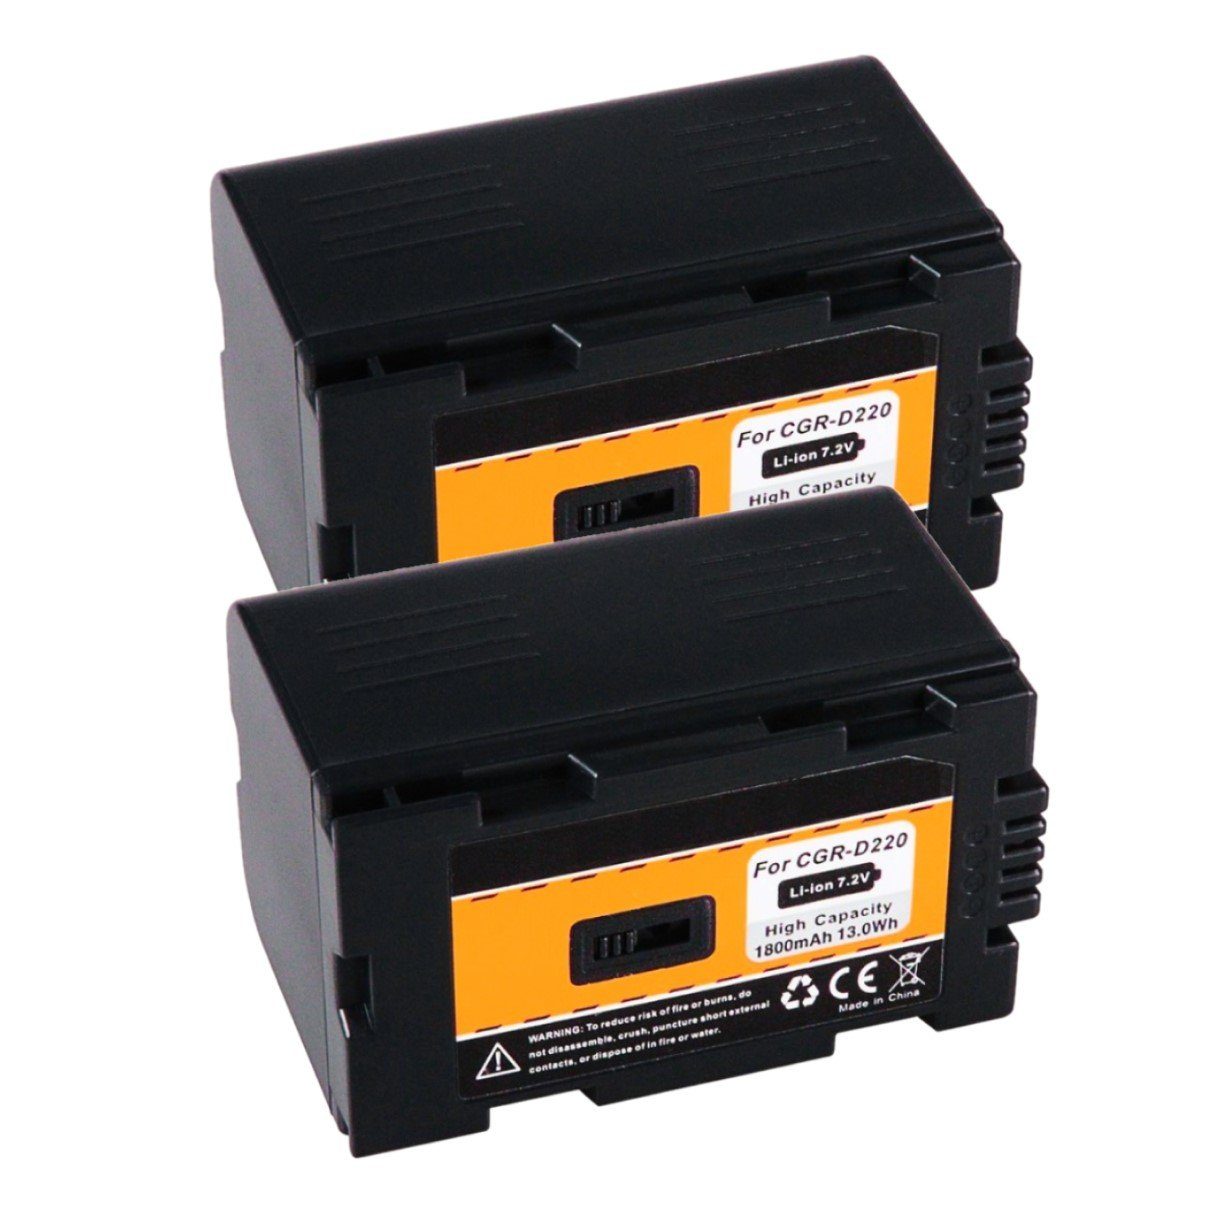 GOLDBATT 2x Akku für Panasonic CGR-D220 CGR-D16 NV-Serie CGA-D54 CGA-D54S CGA-D54SE CGA-D54SE/1B Kamera-Akku Ersatzakku 1800 mAh (7,2 V, 2 St), 100% kompatibel mit den Original Akkus durch maßgefertigte Passform inklusive Überhitzungsschutz